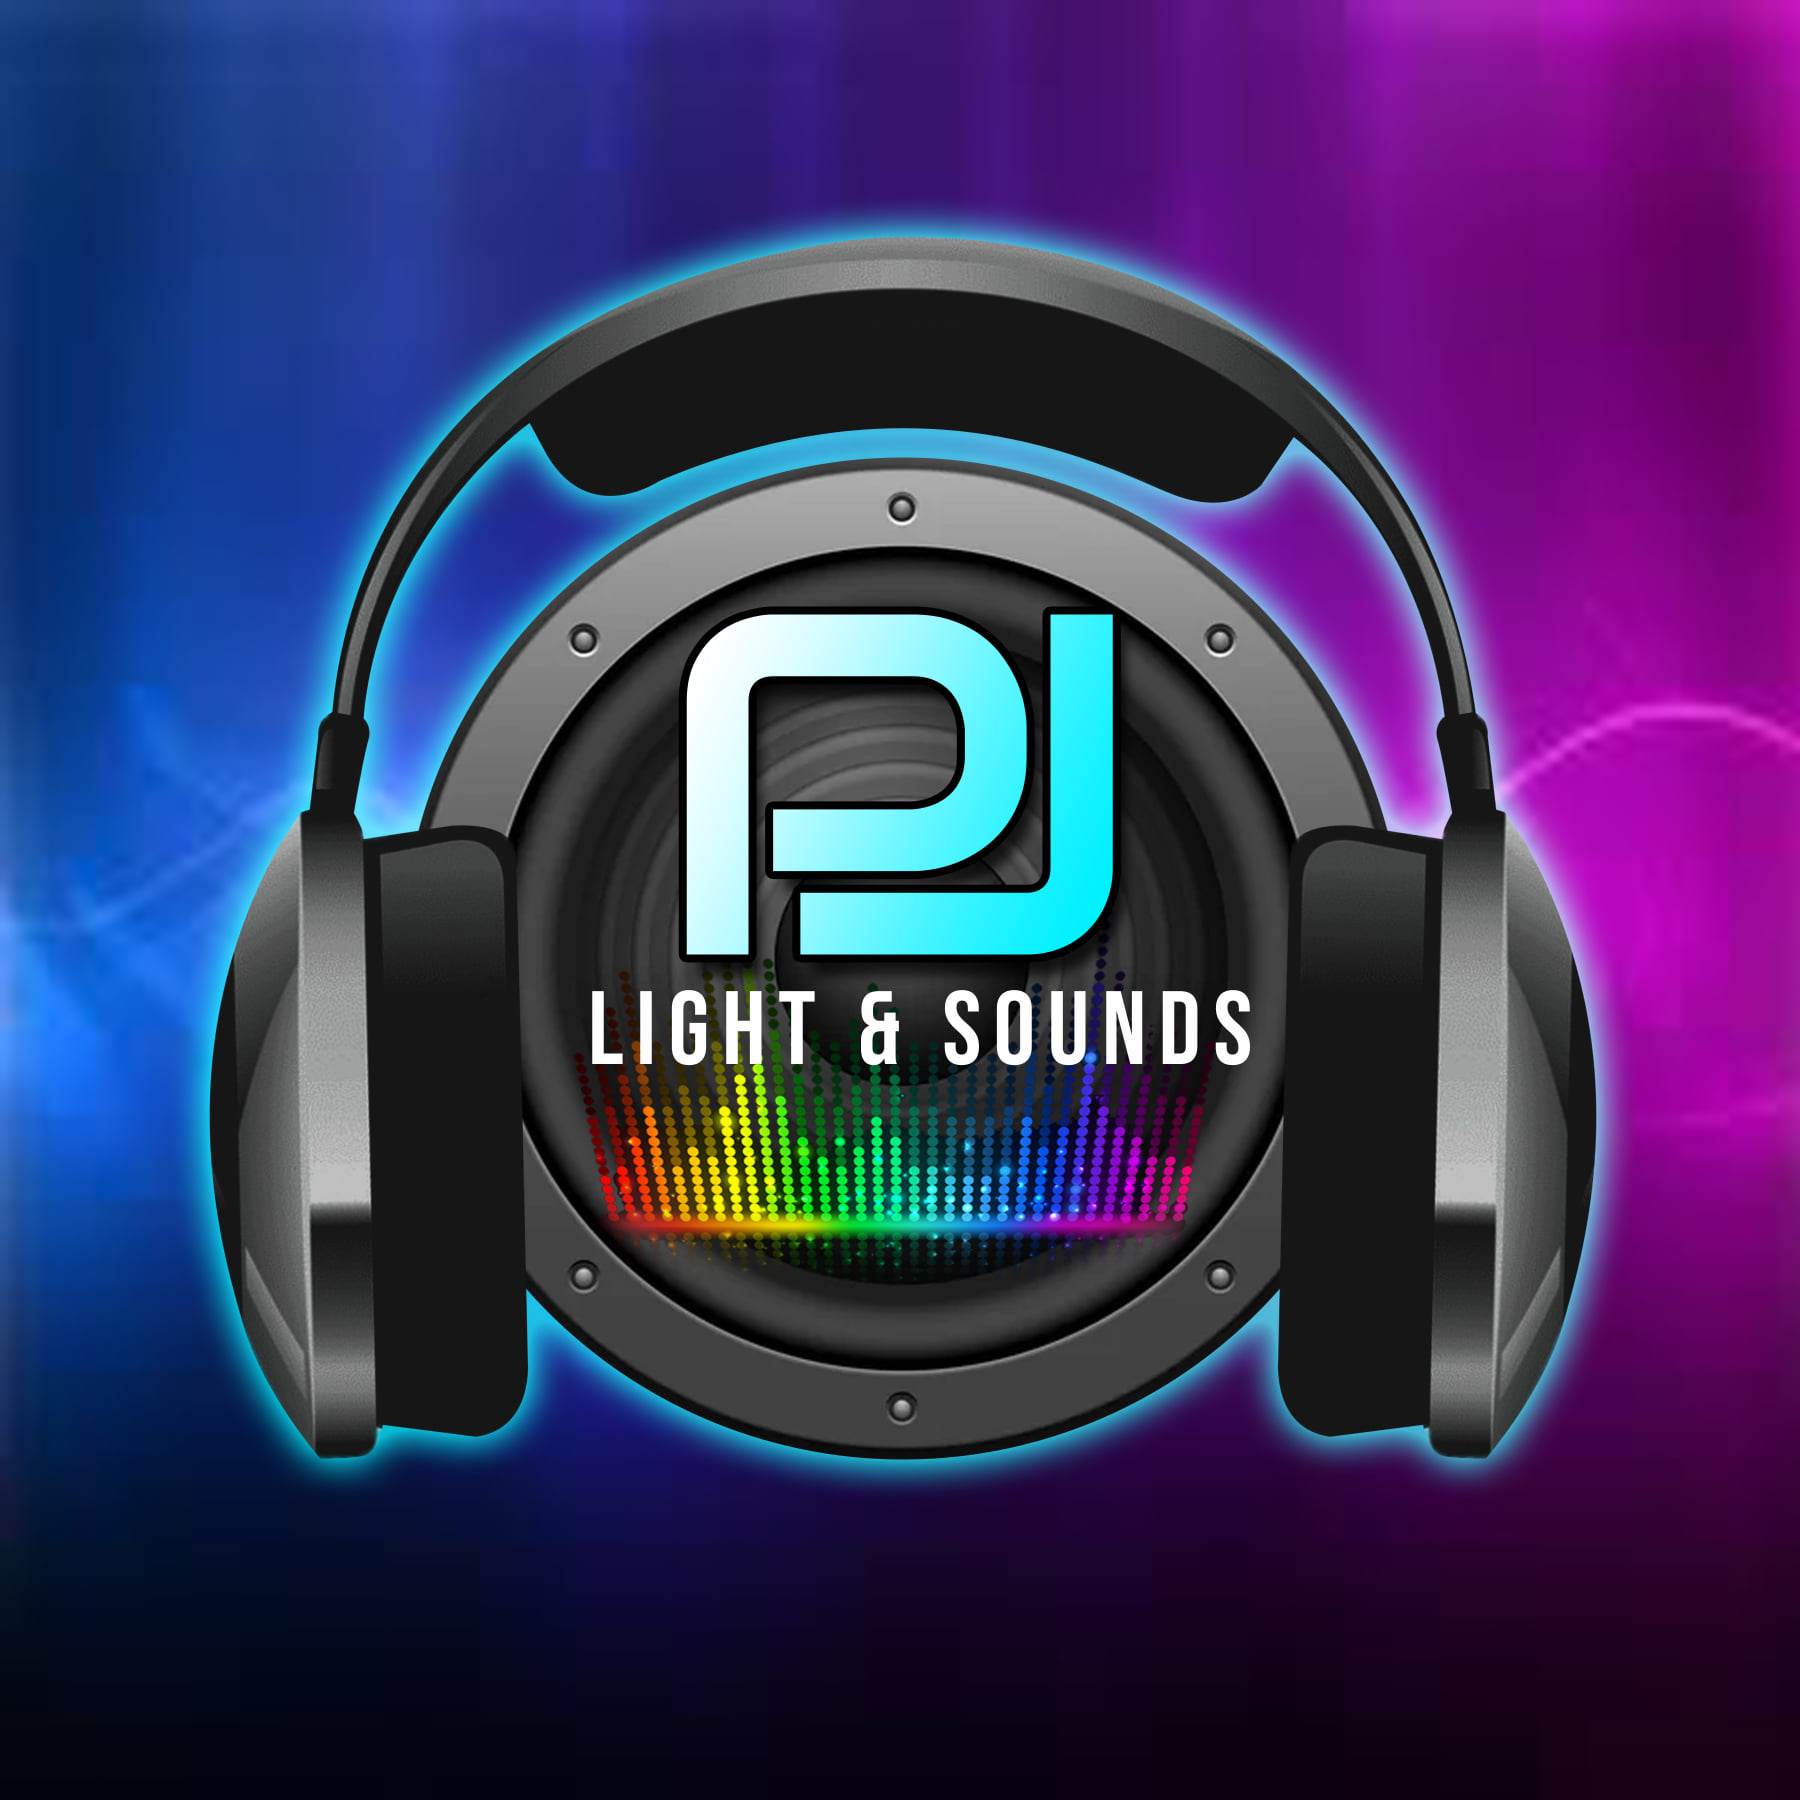 PJ Lights & Sounds